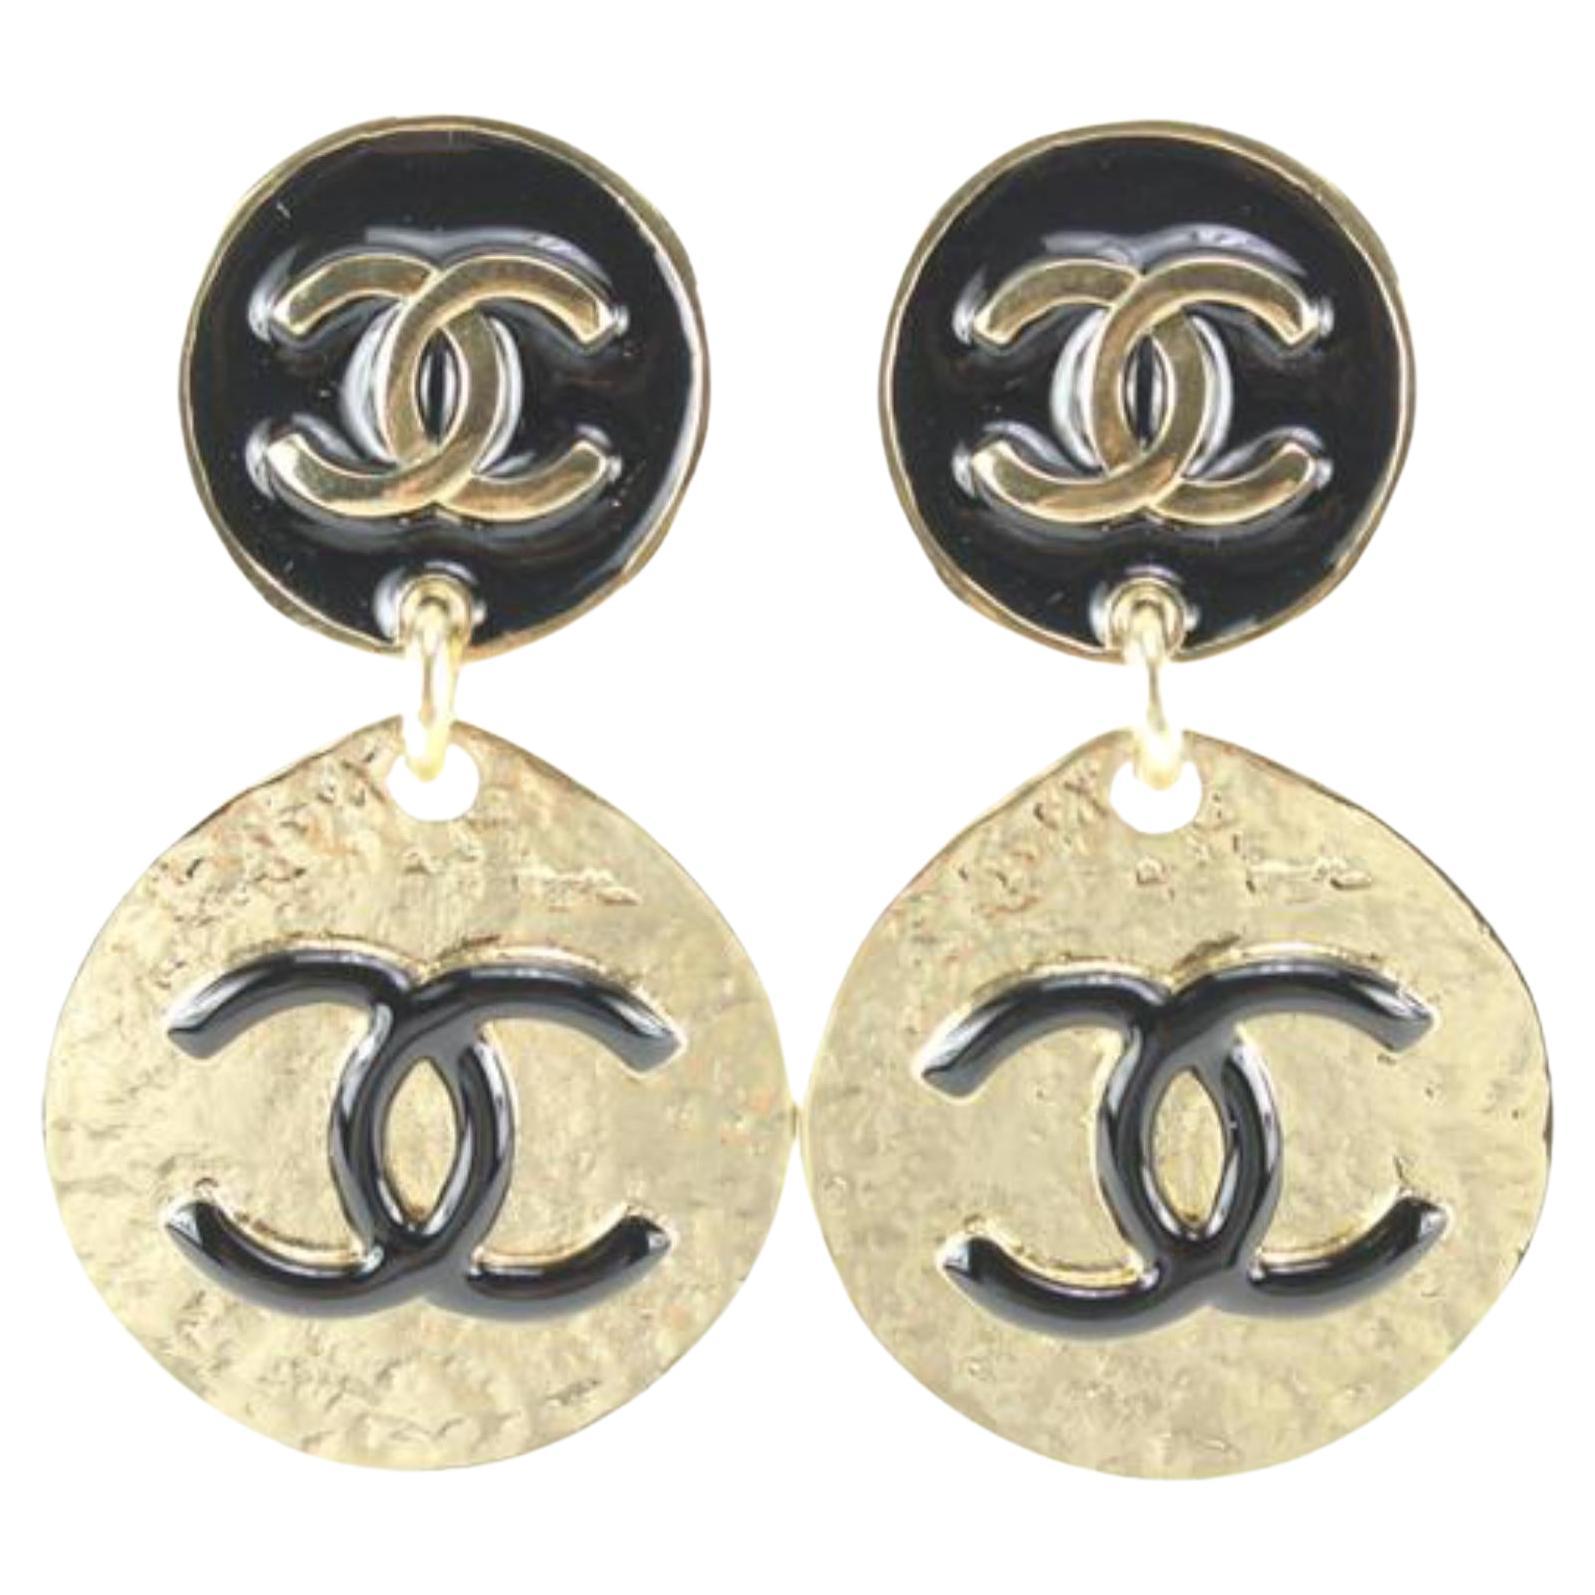 CHANEL, Jewelry, Chanel 2s Turnlock Cc Logo Earrings Brand New Nwt